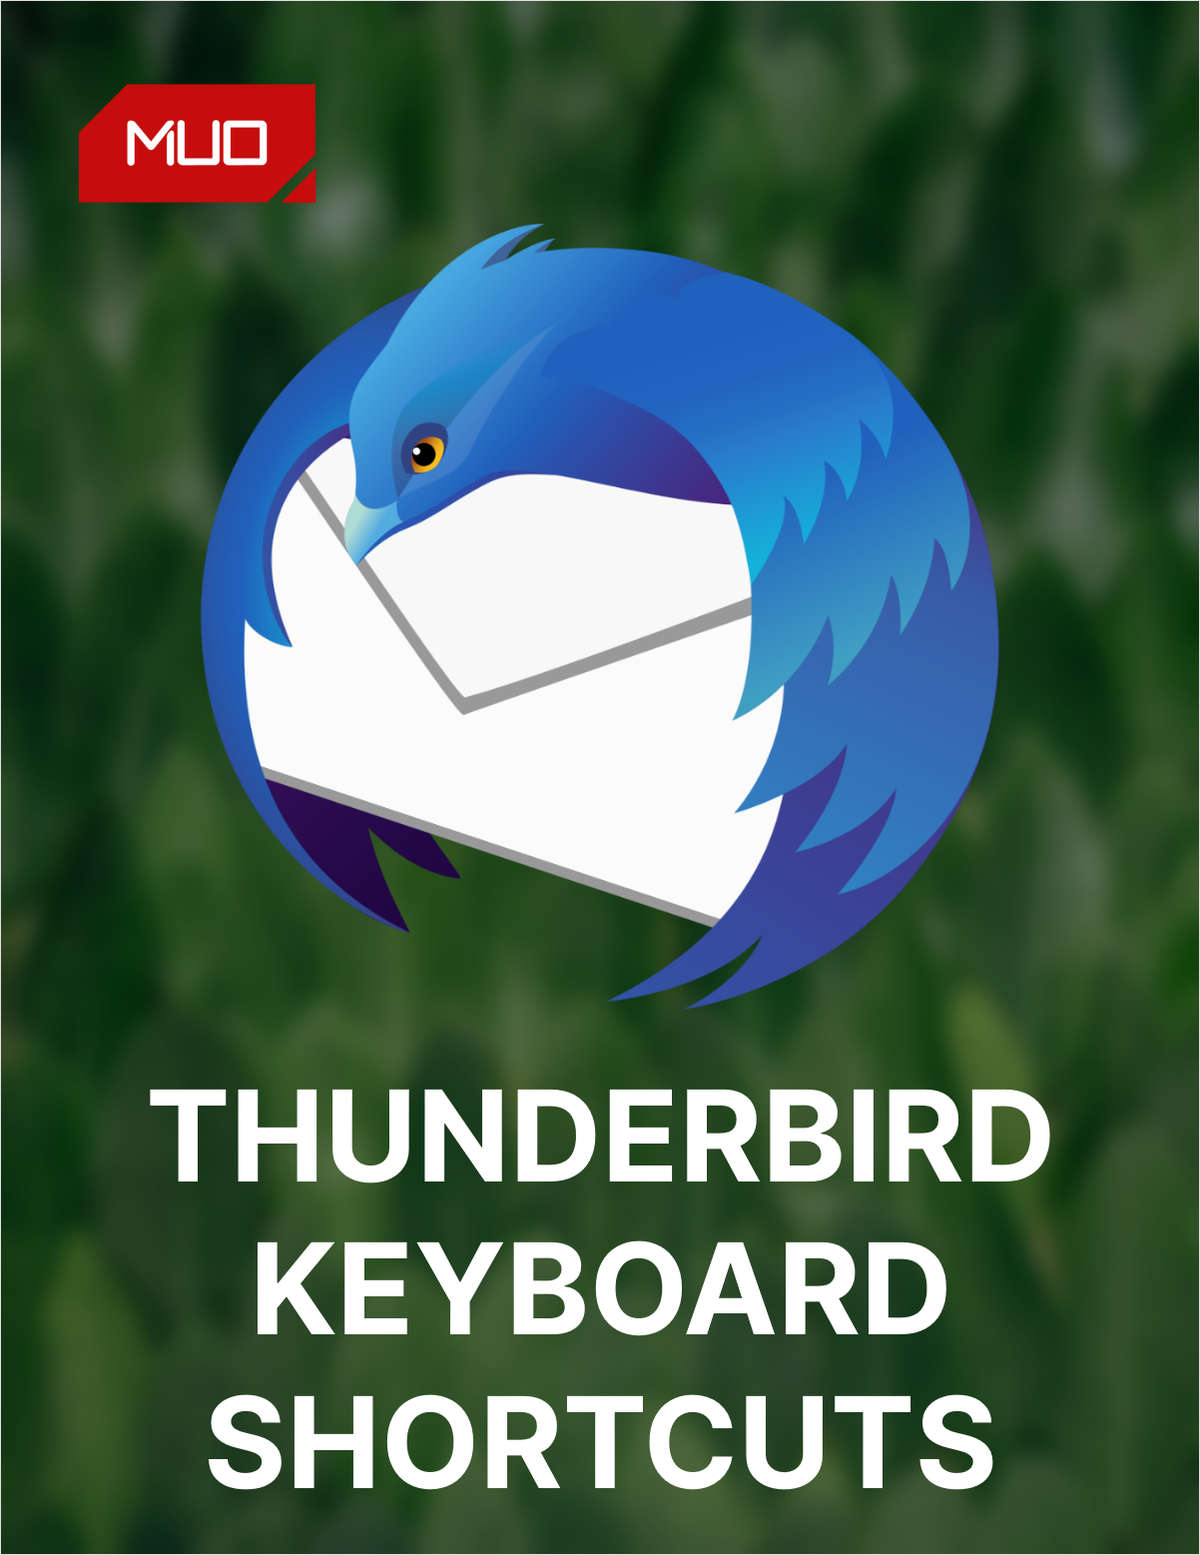 Mozilla Thunderbird: Every Keyboard Shortcut You Need to Master